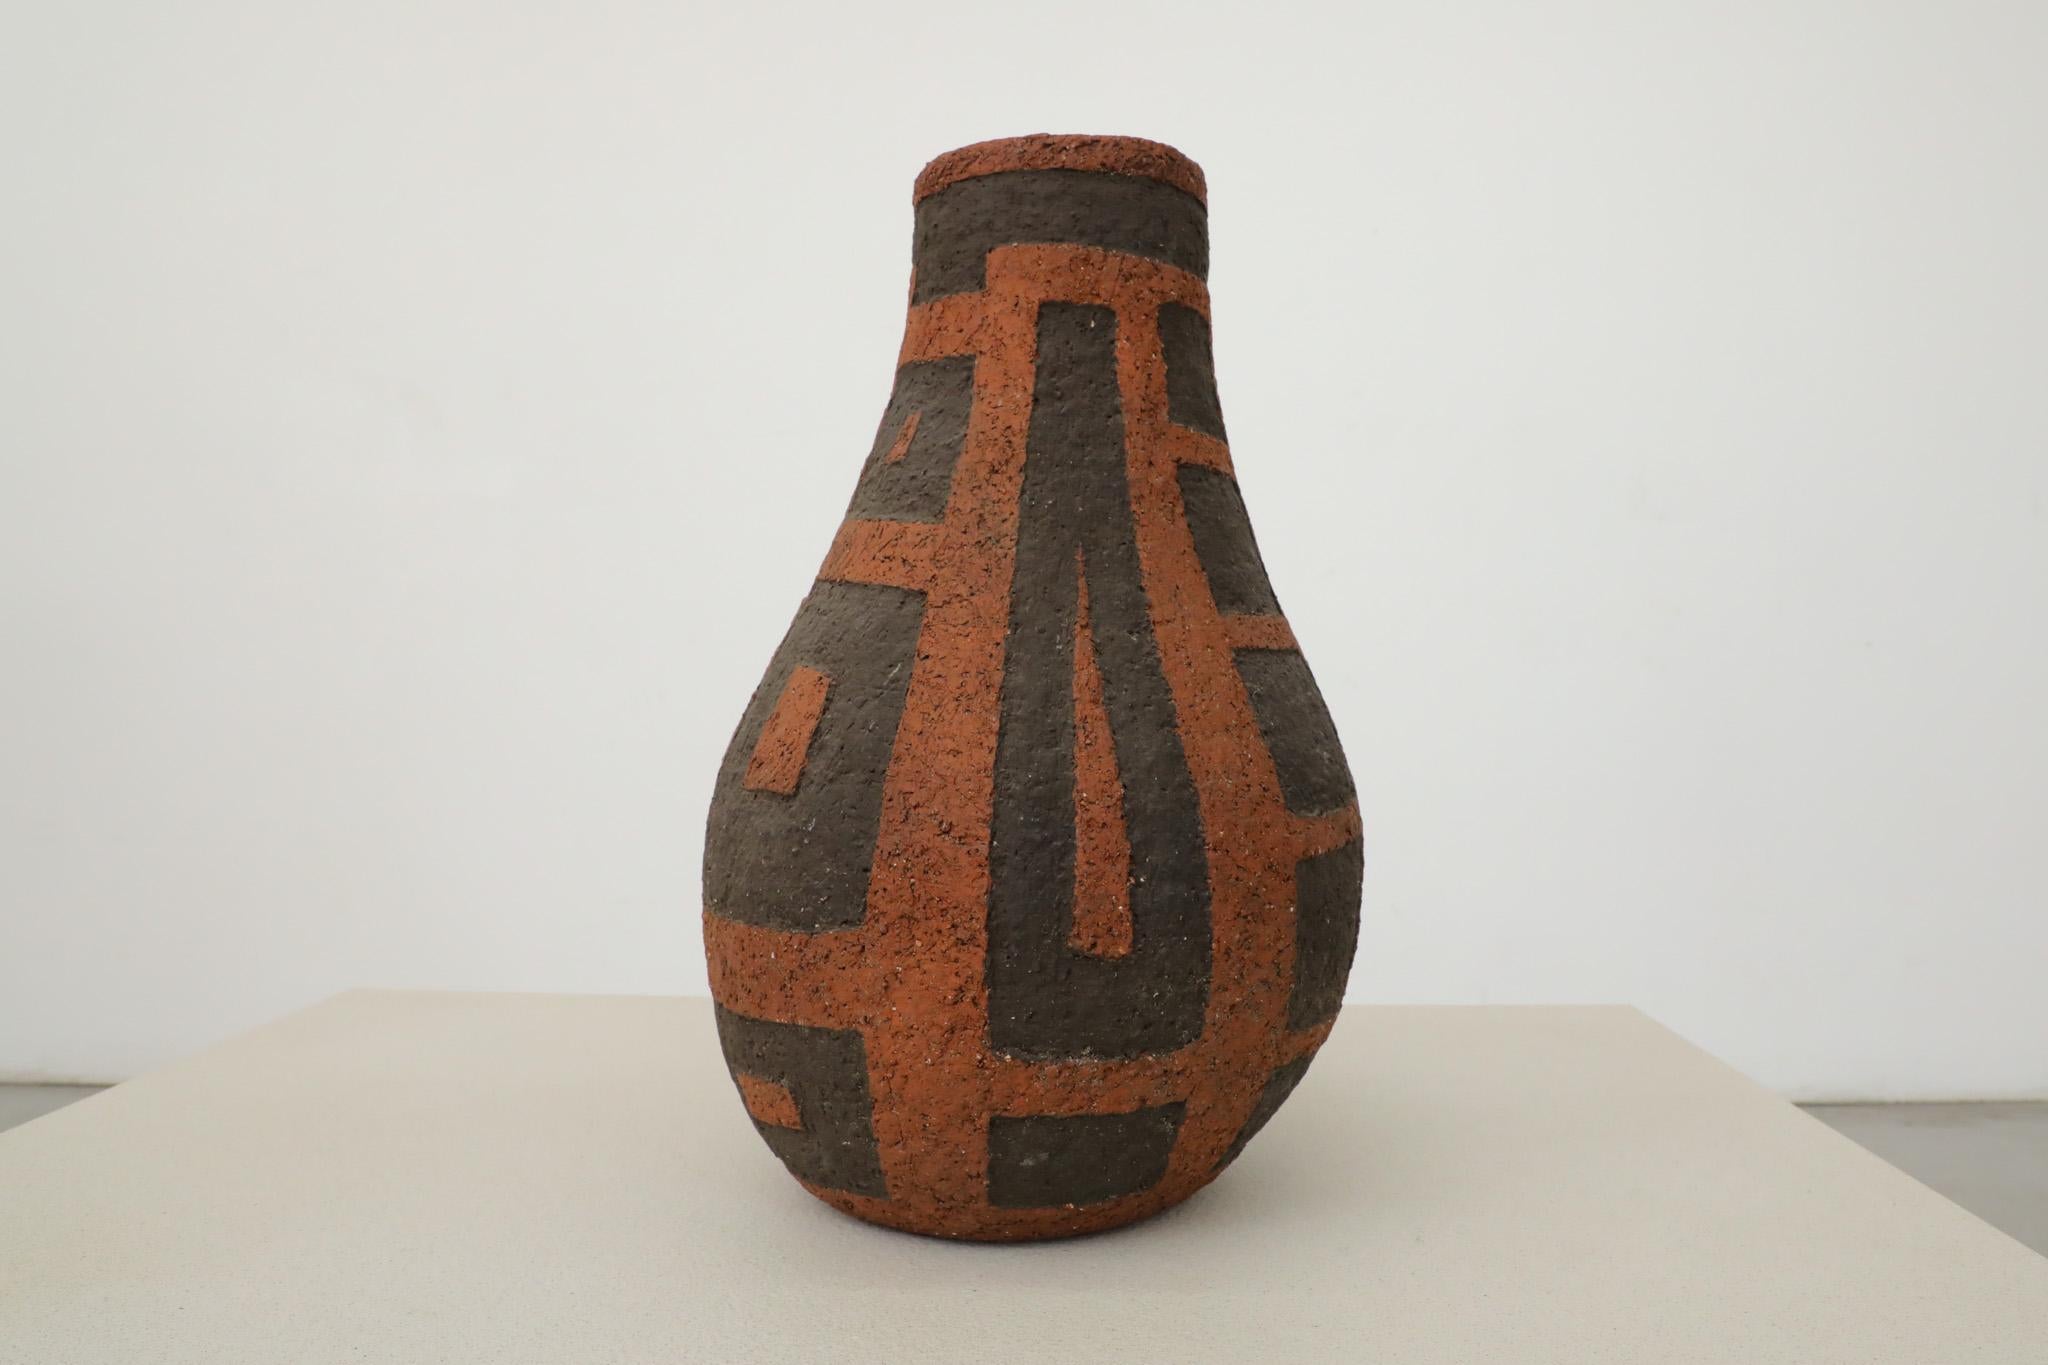 Large Red & Brown Ceramic Carstens Tönniehof Vase by Heukeroth & Siery For Sale 1